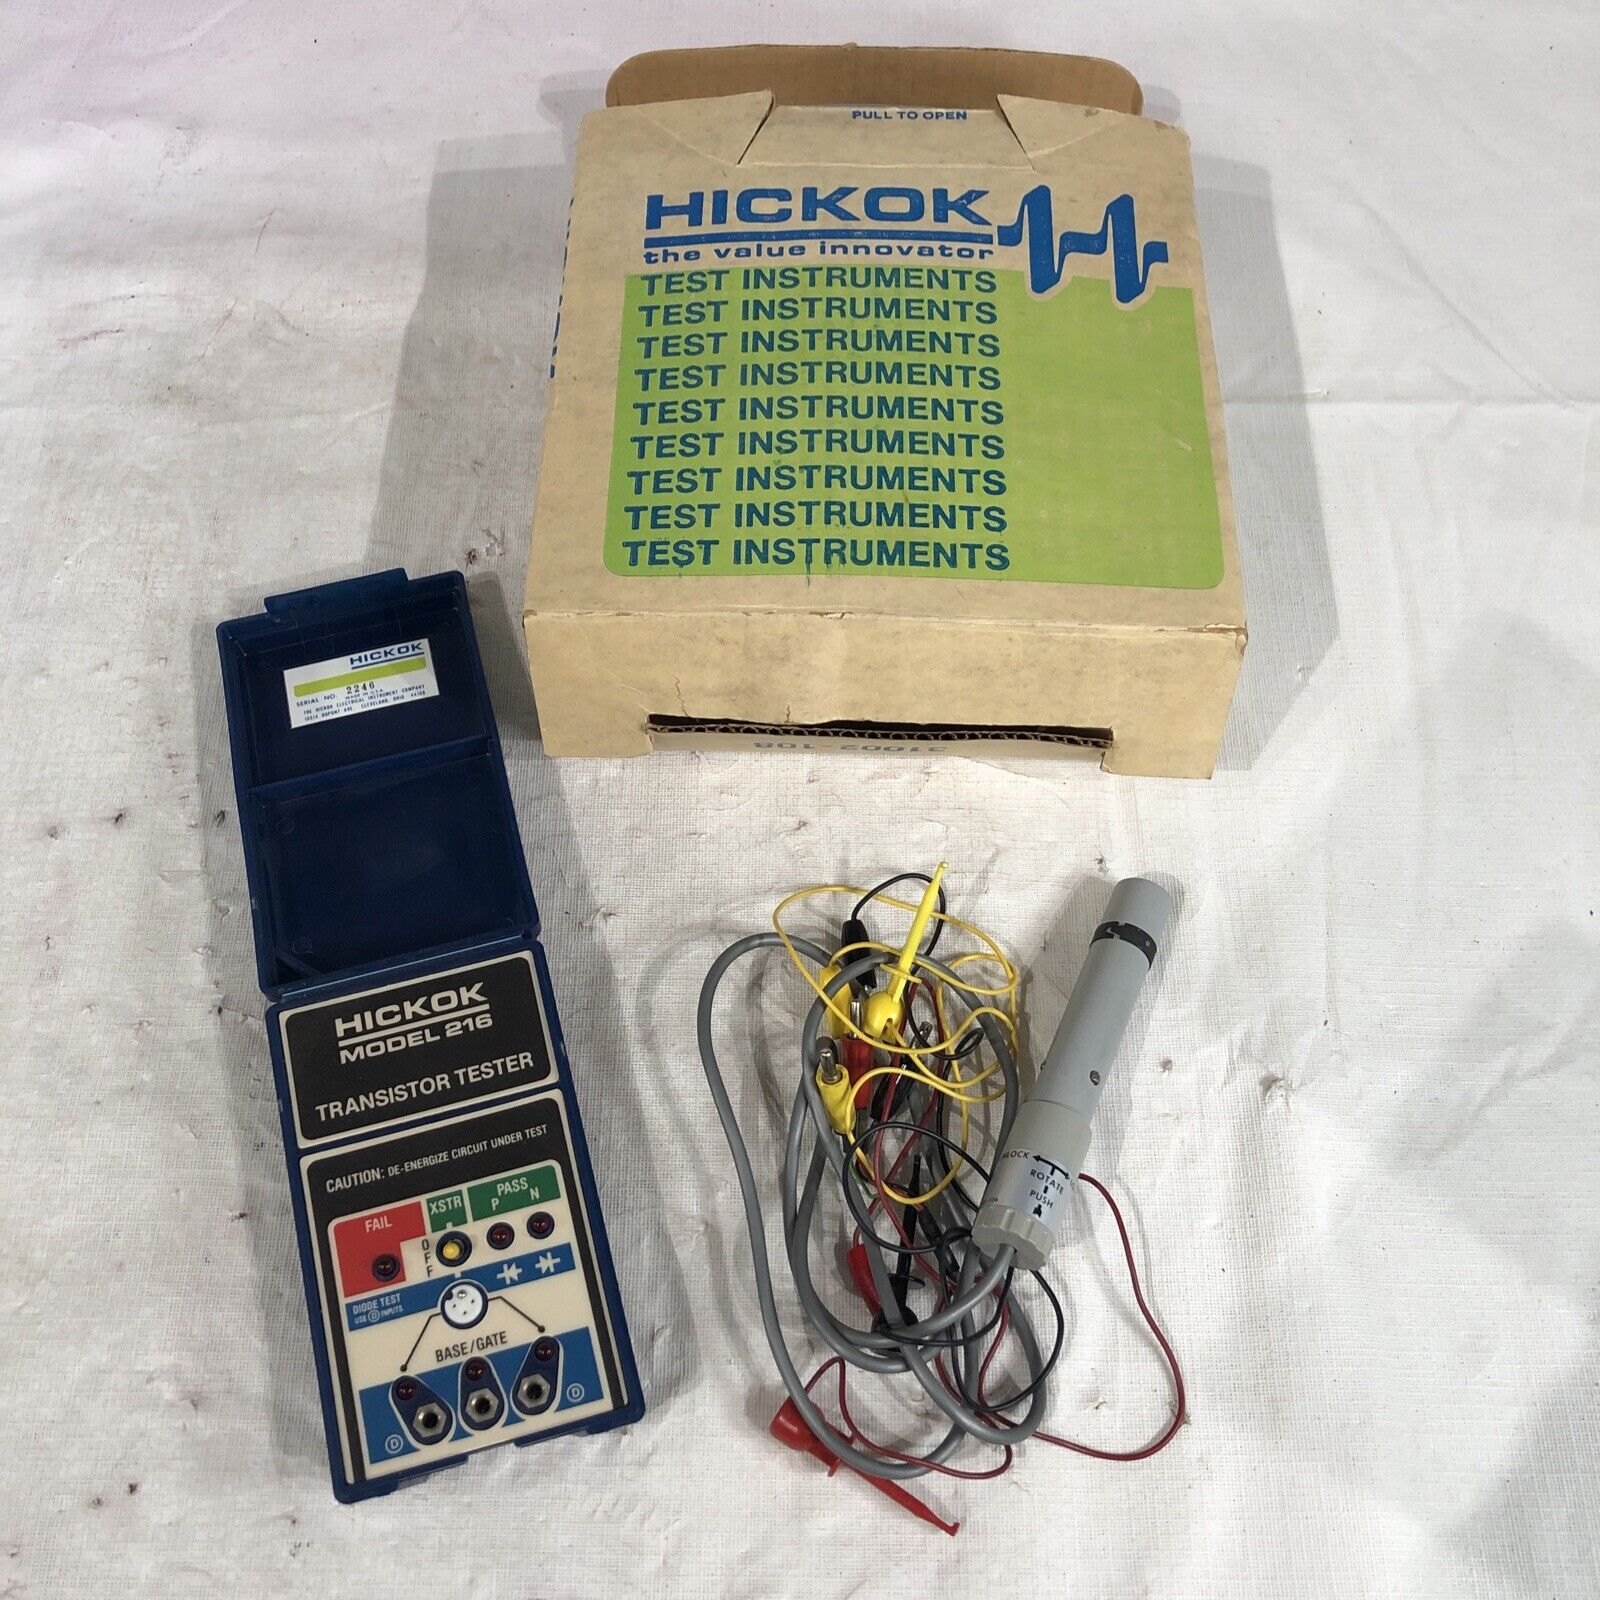 Hickok Pocket Semiconductor Analyzer Model 215 w/ Probes, Box